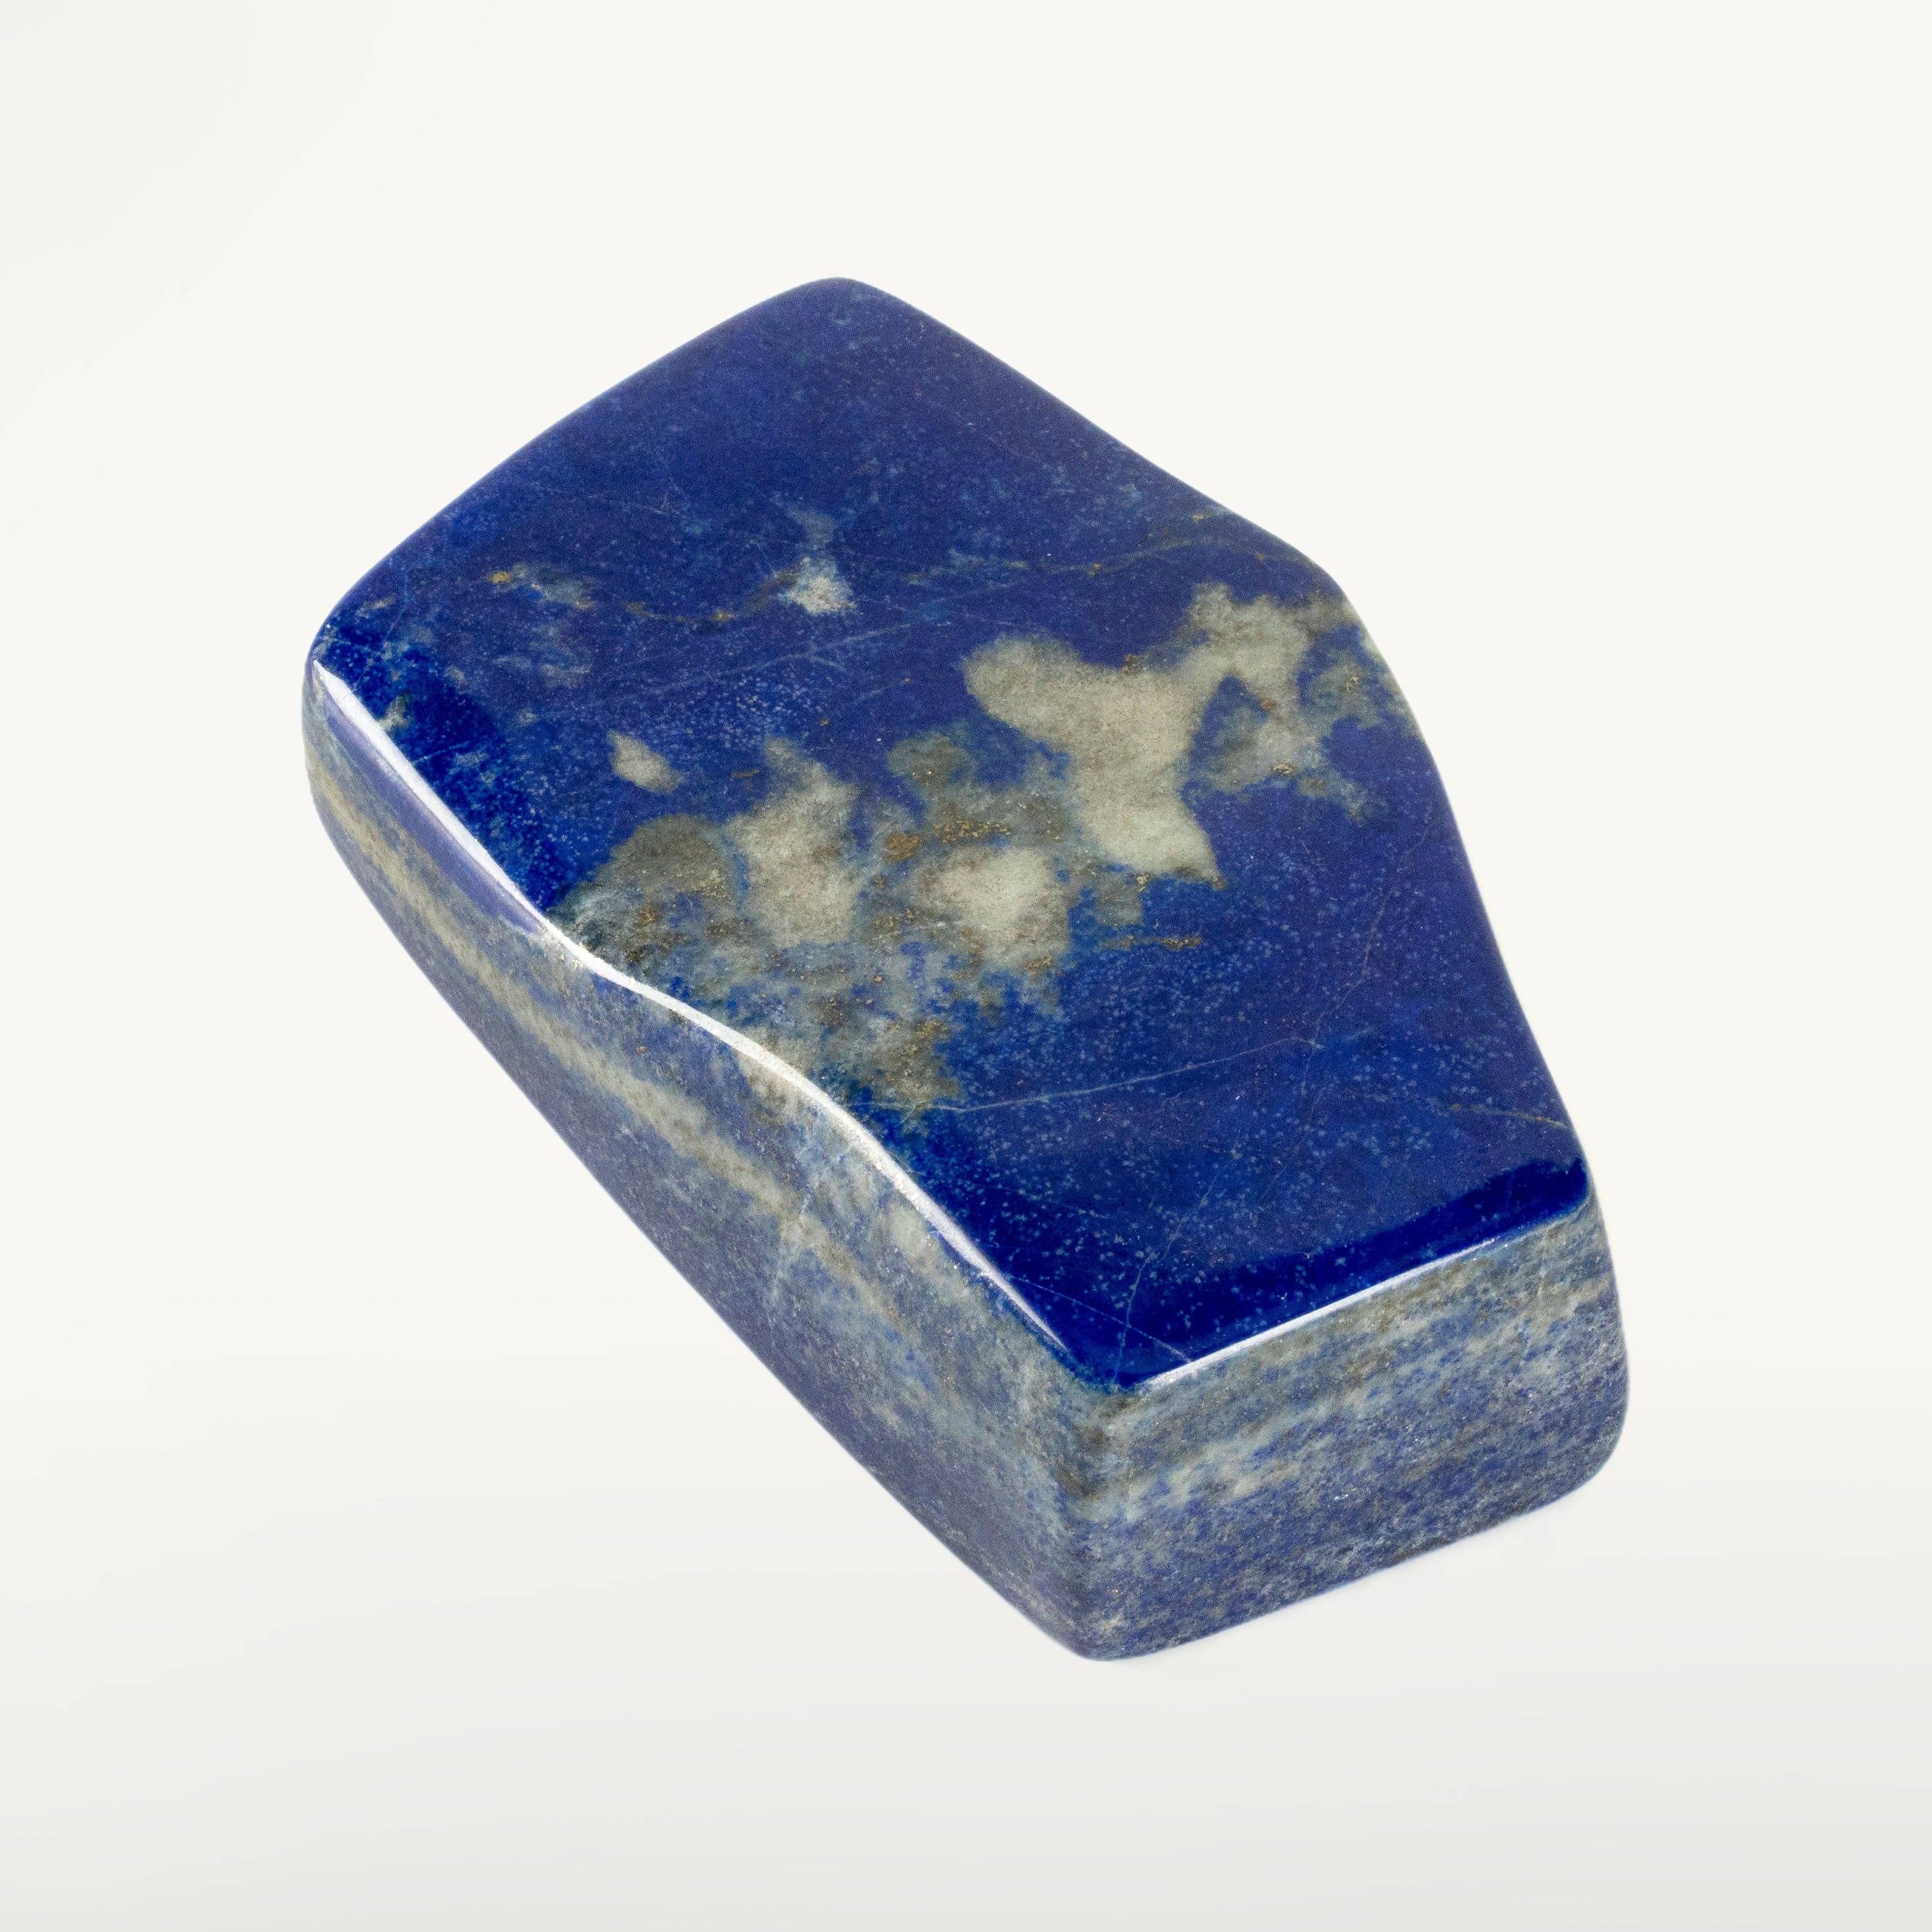 Kalifano Lapis Lapis Lazuli Freeform from Afghanistan - 5.5" / 847 grams LP850.002